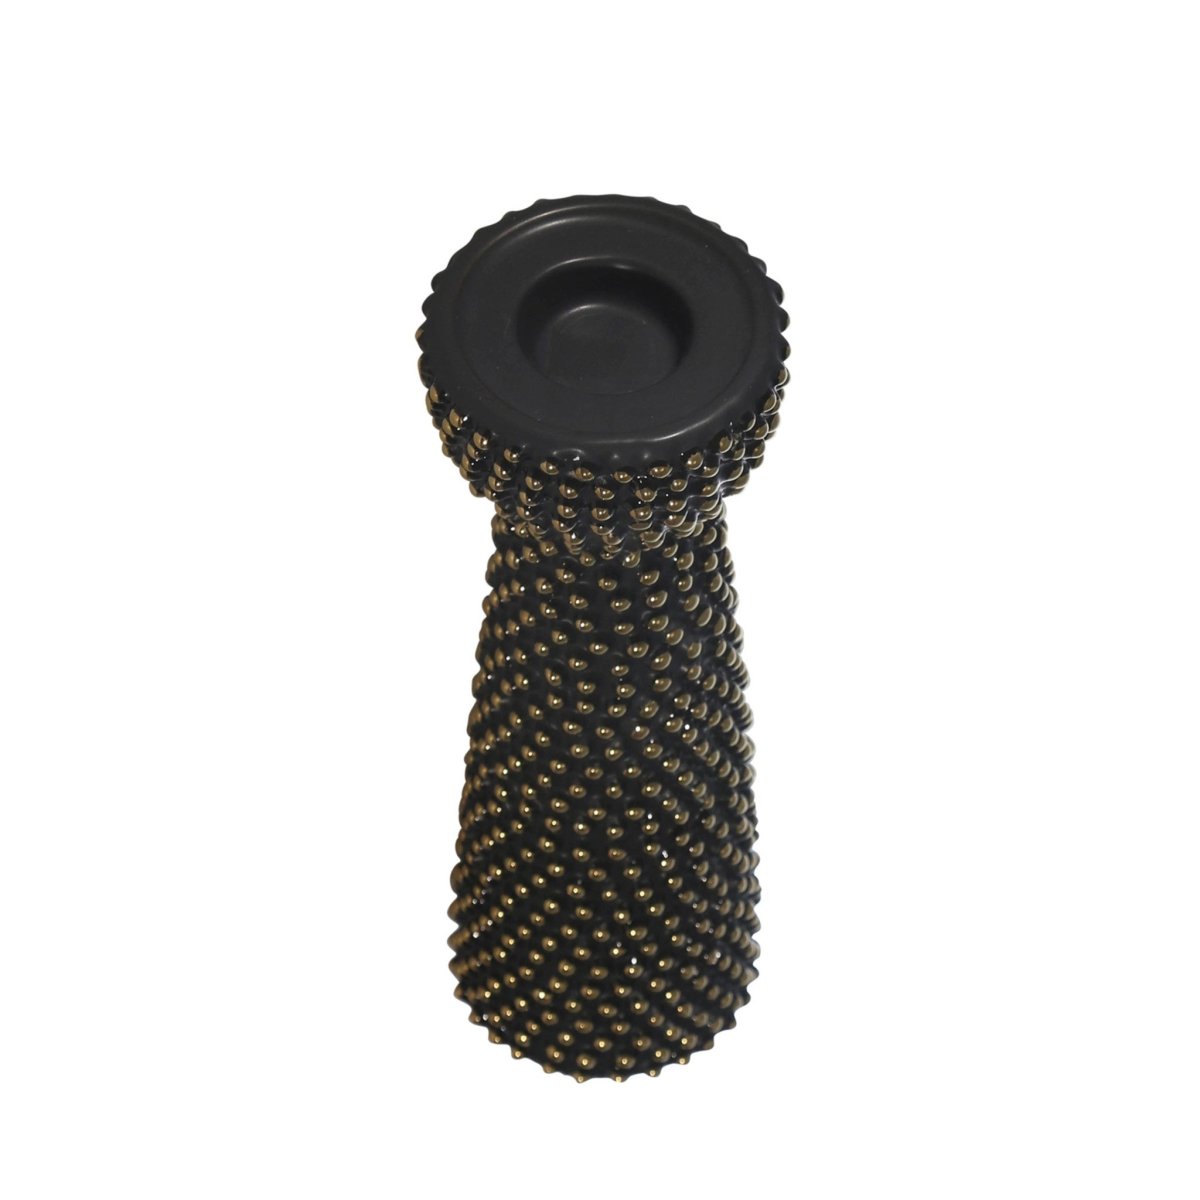 Sagebrook Home Black & Gold Ceramic Spike Candle Holder - lily & onyx